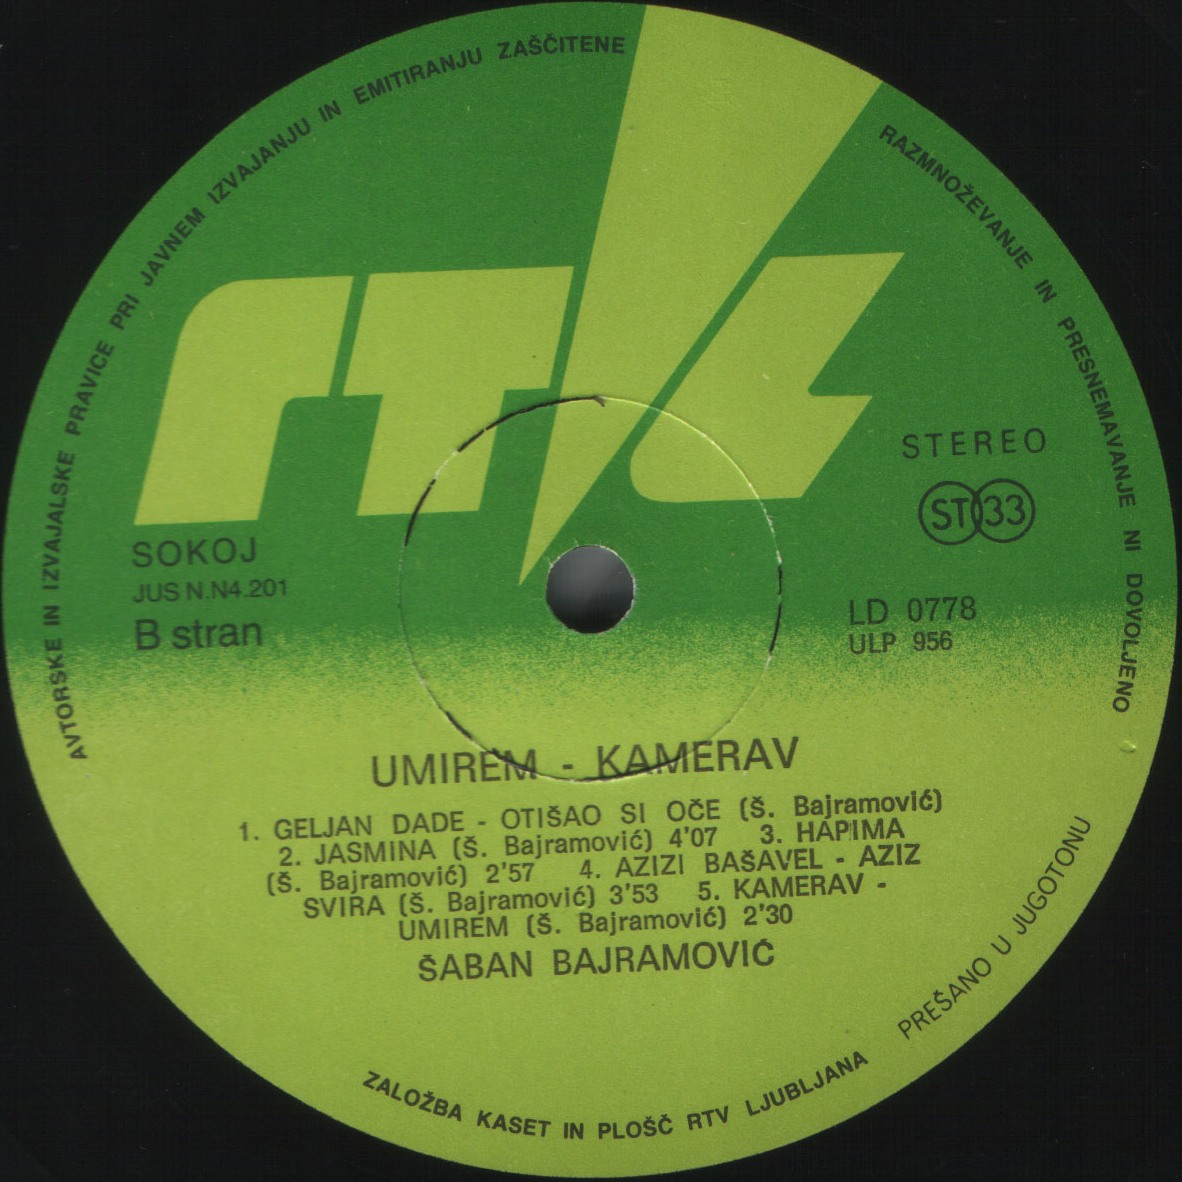 Saban Bajramovic 1982 B